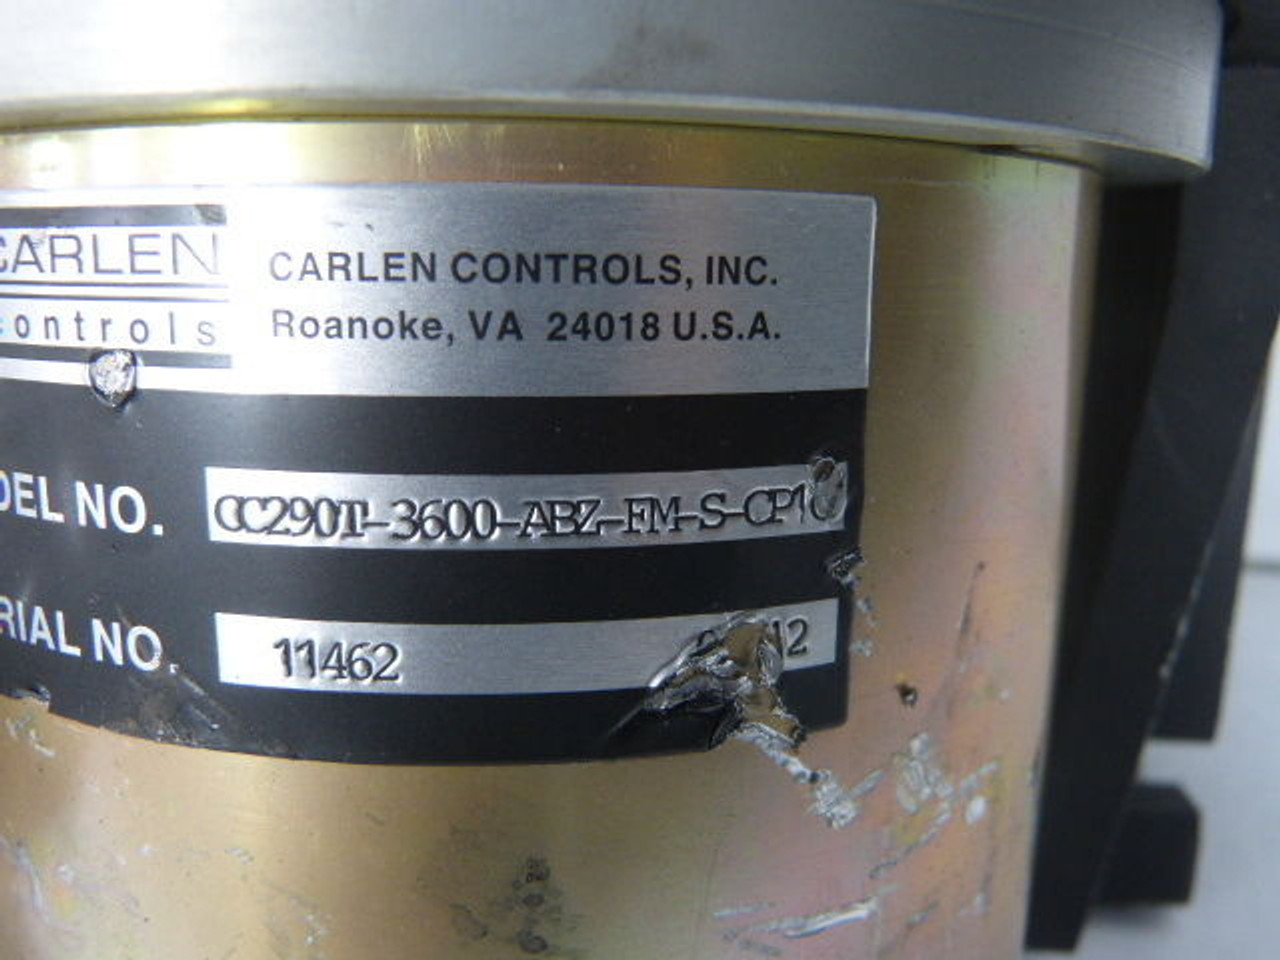 Carlen Controls CC290T-3600-ABZ-FM-S-CP10 Encoder 0-30000RPM 5-30VDC USED